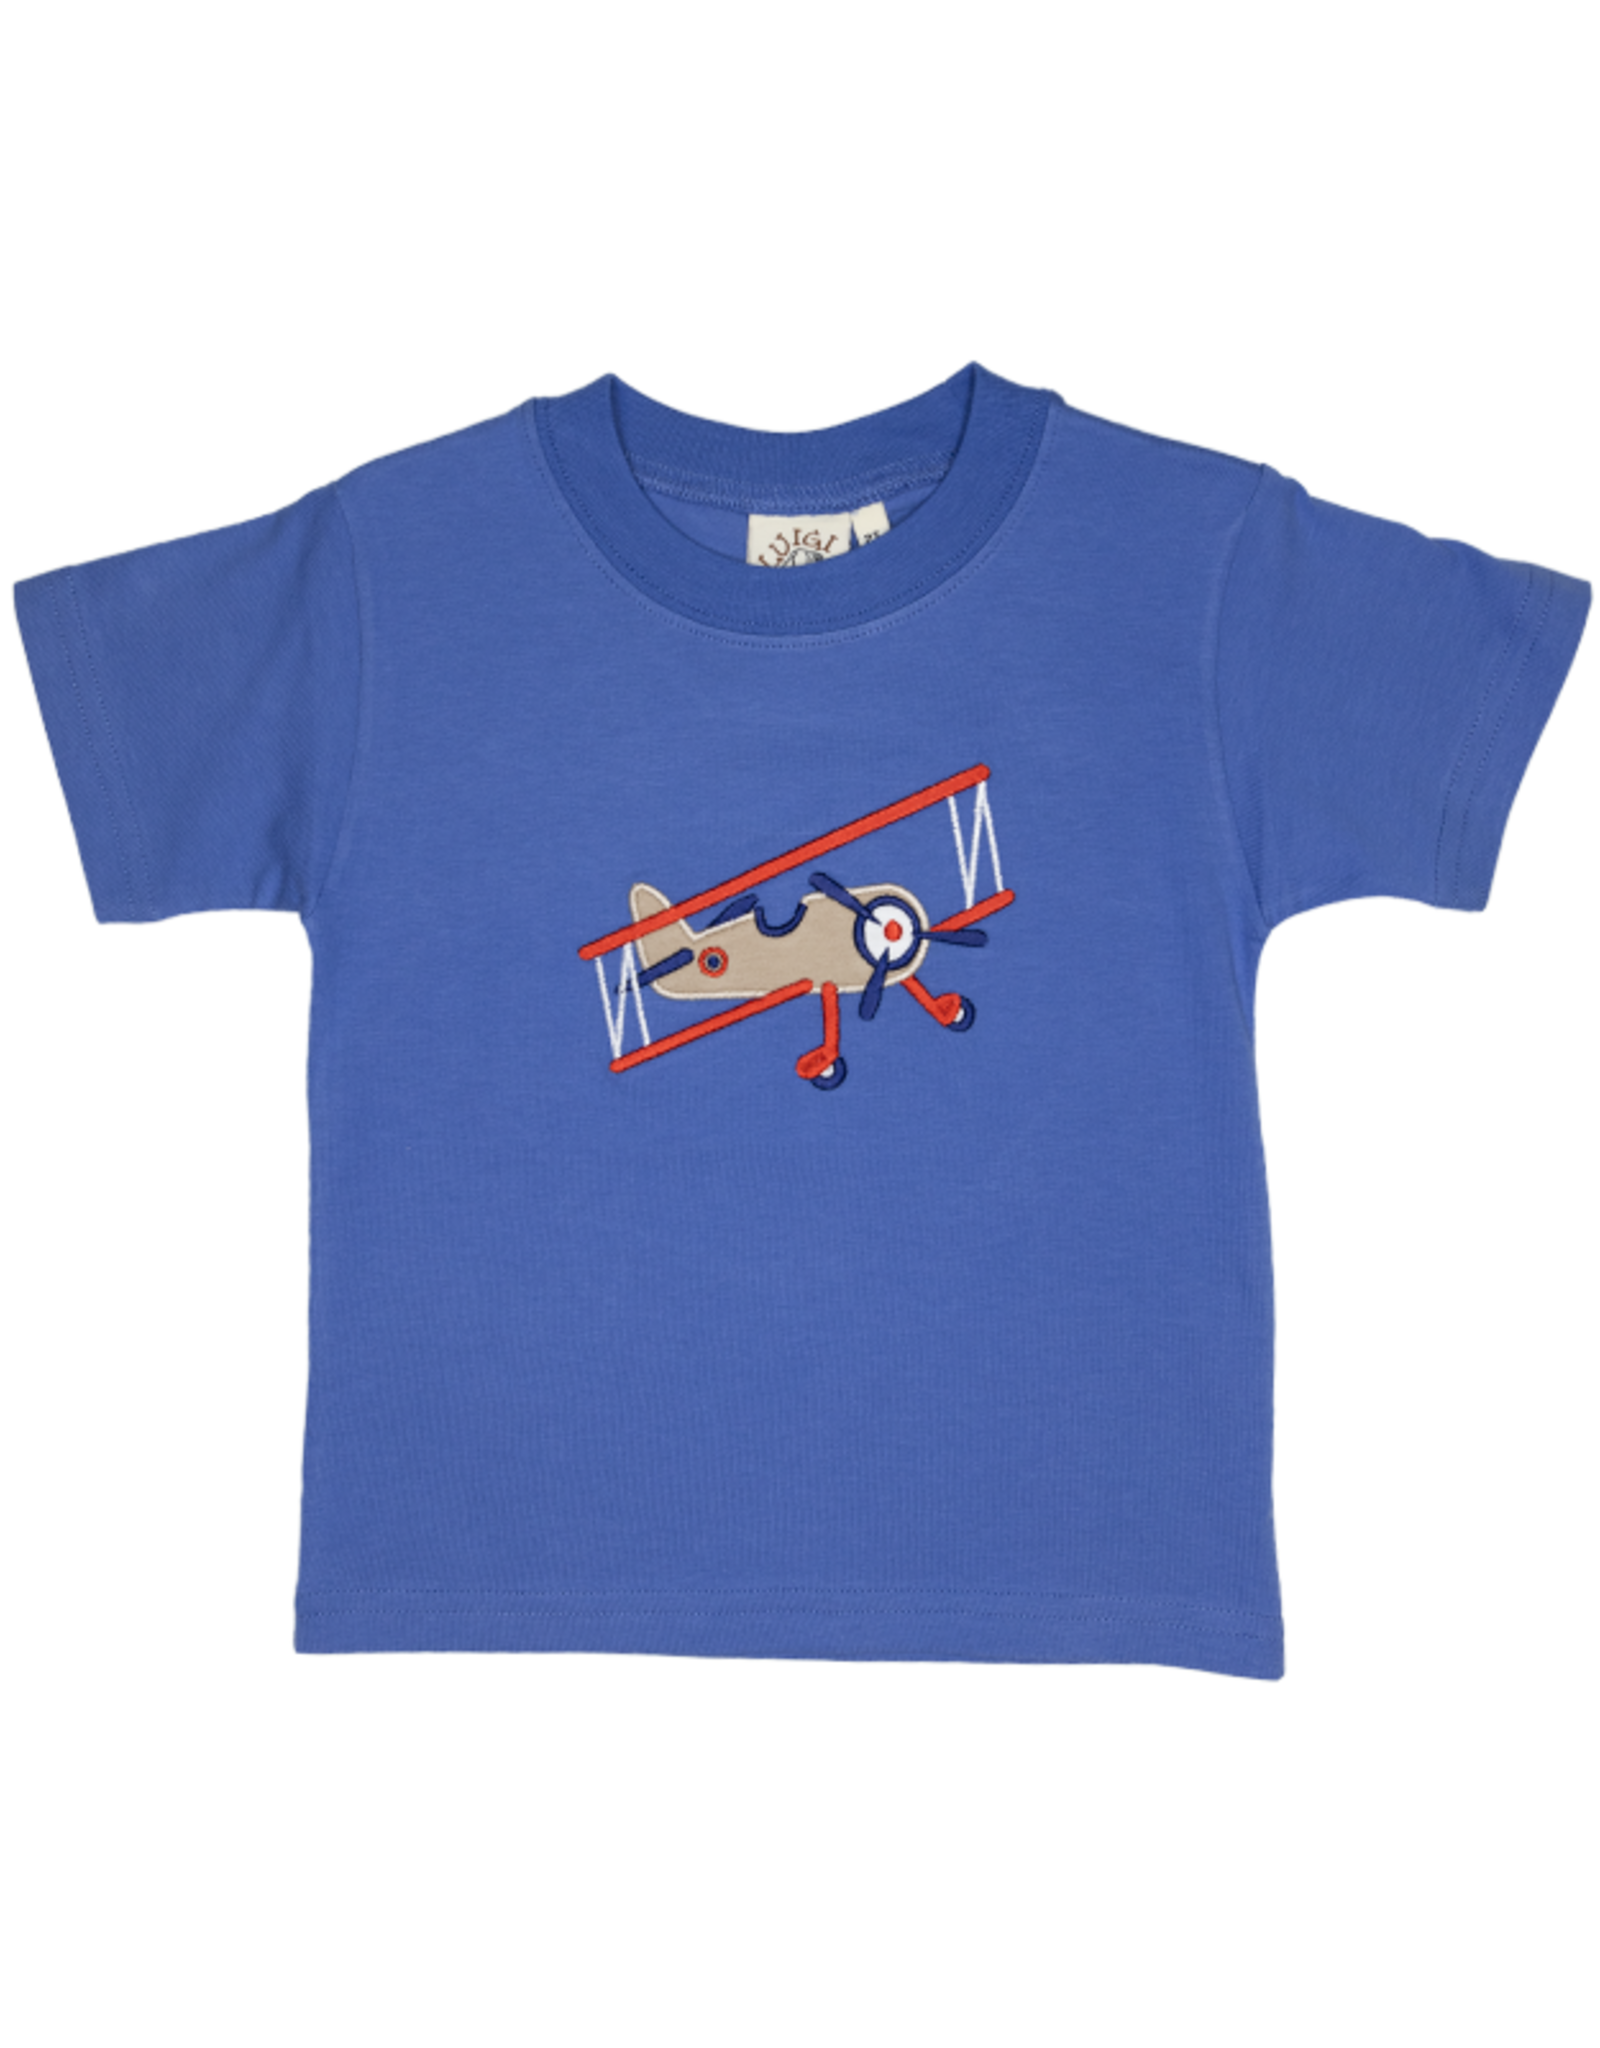 Luigi S24 Dk Chambray Biplane Shirt